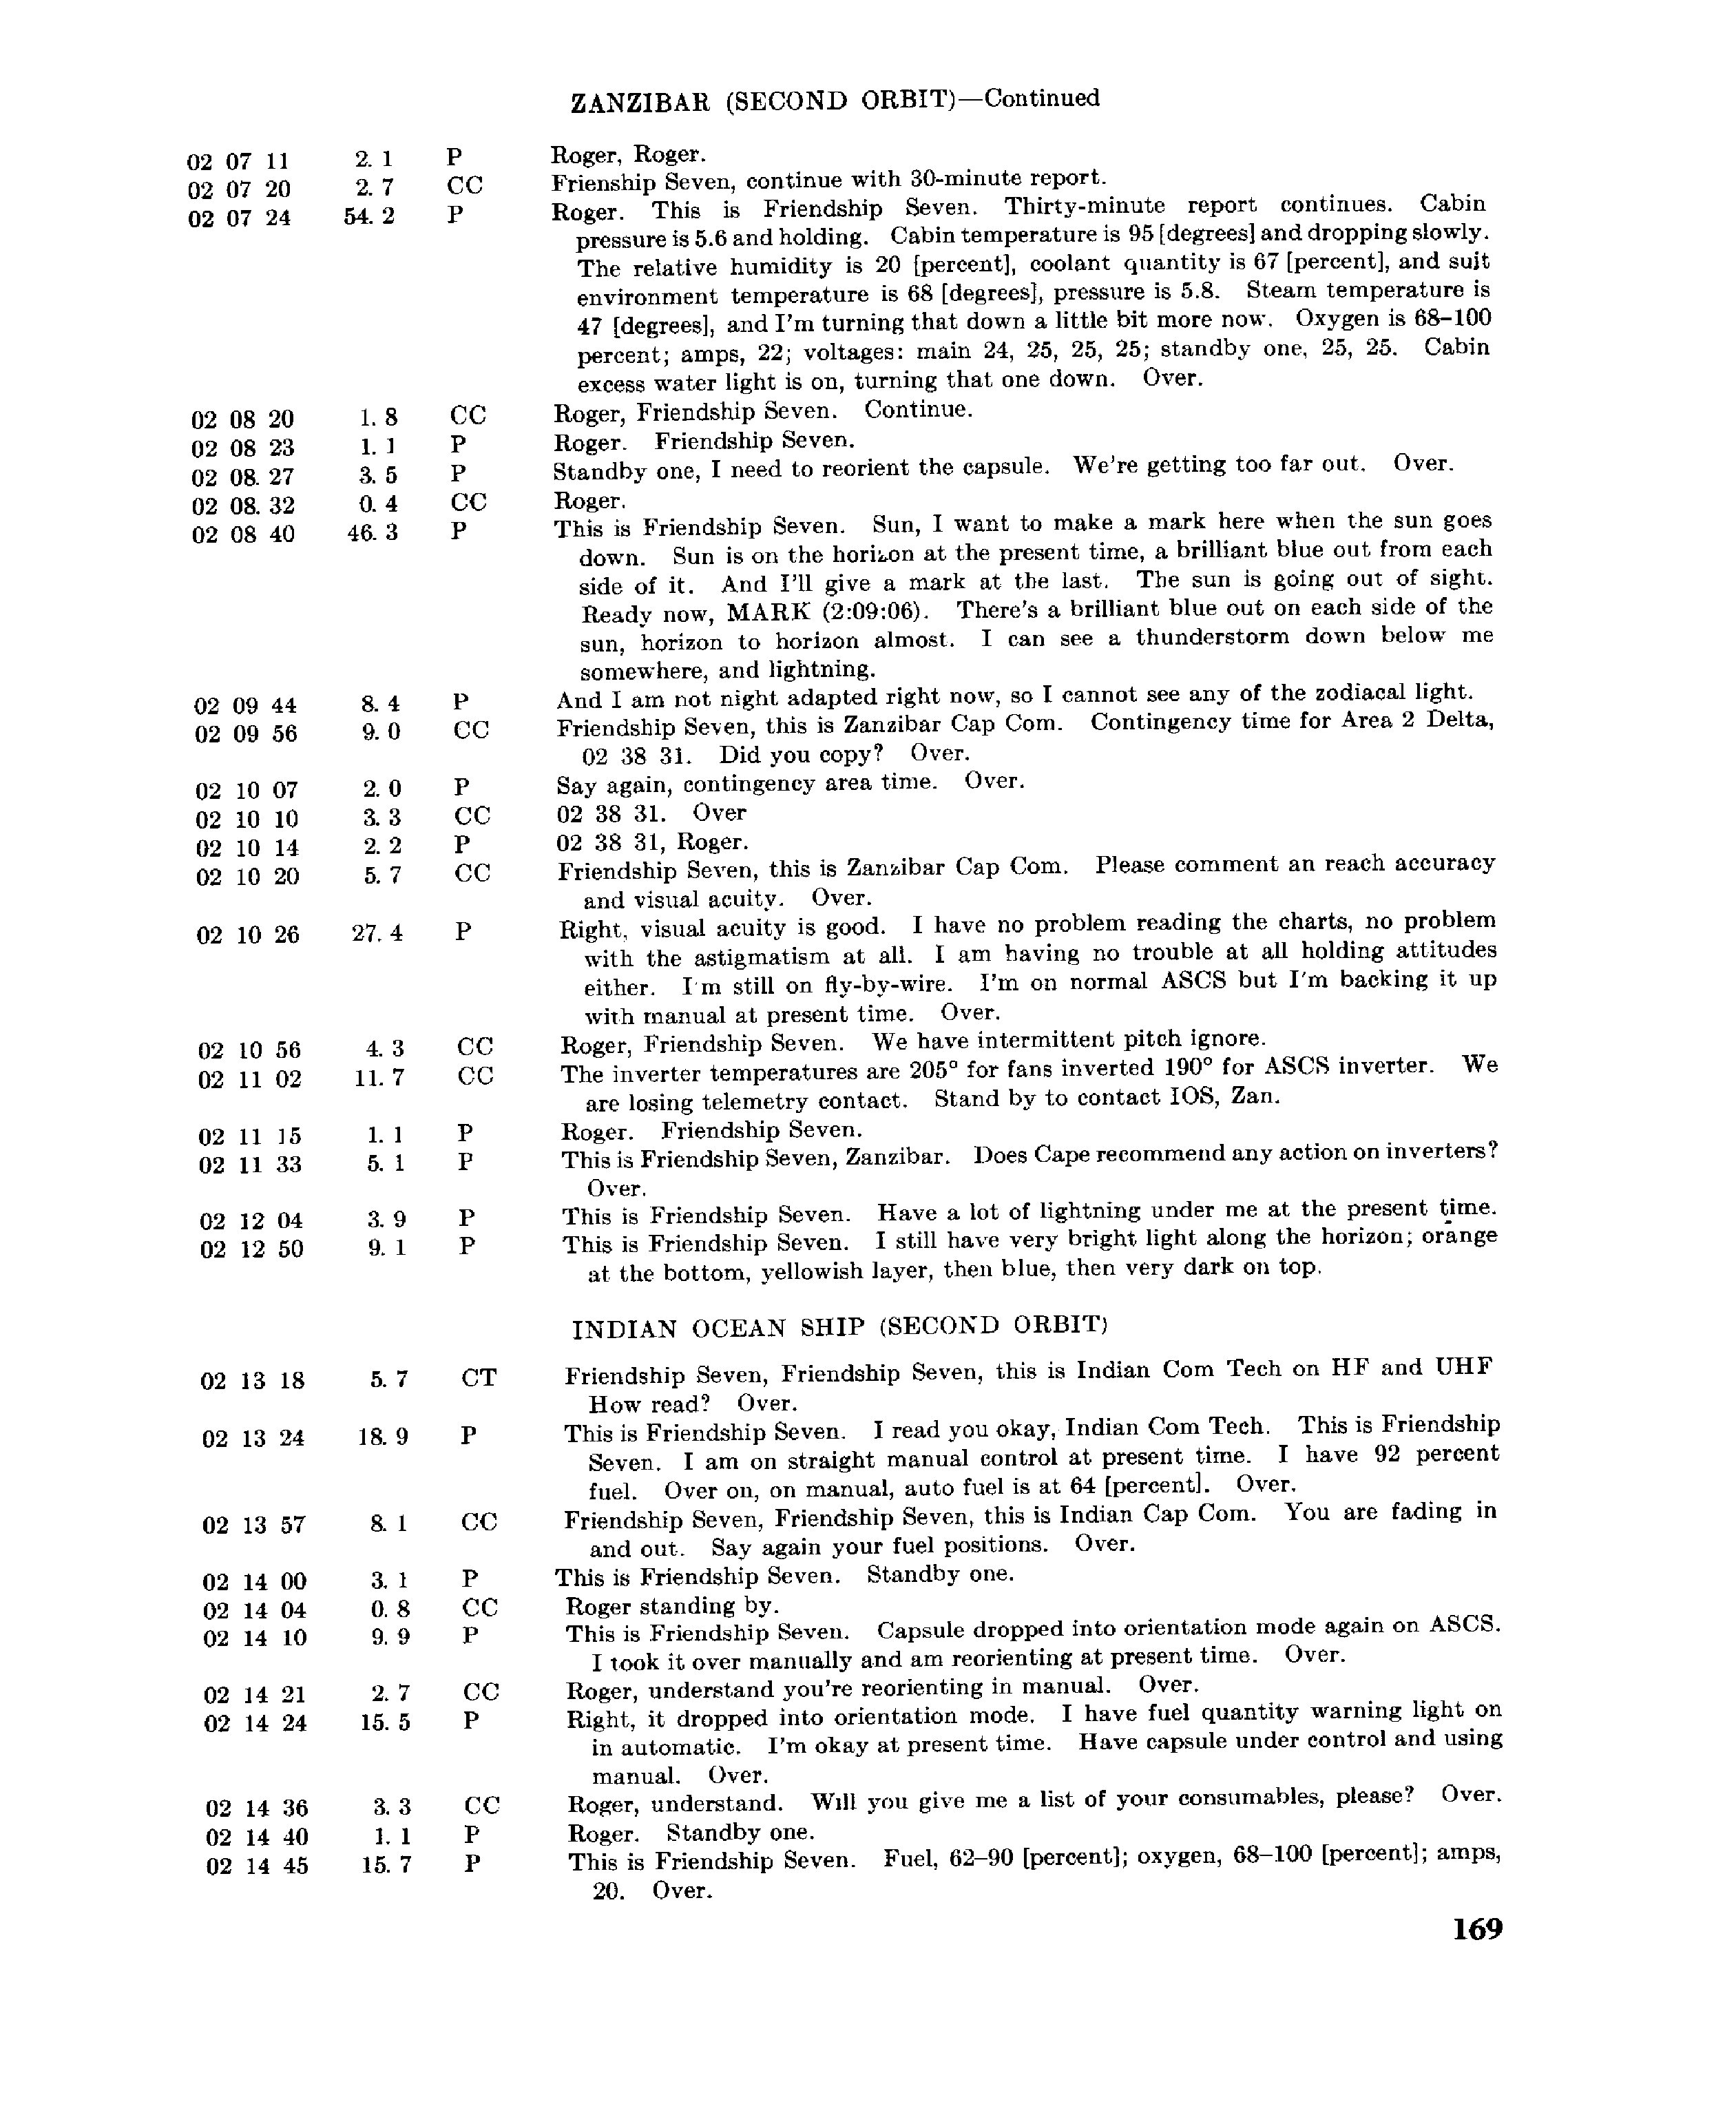 Page 168 of Mercury 6’s original transcript